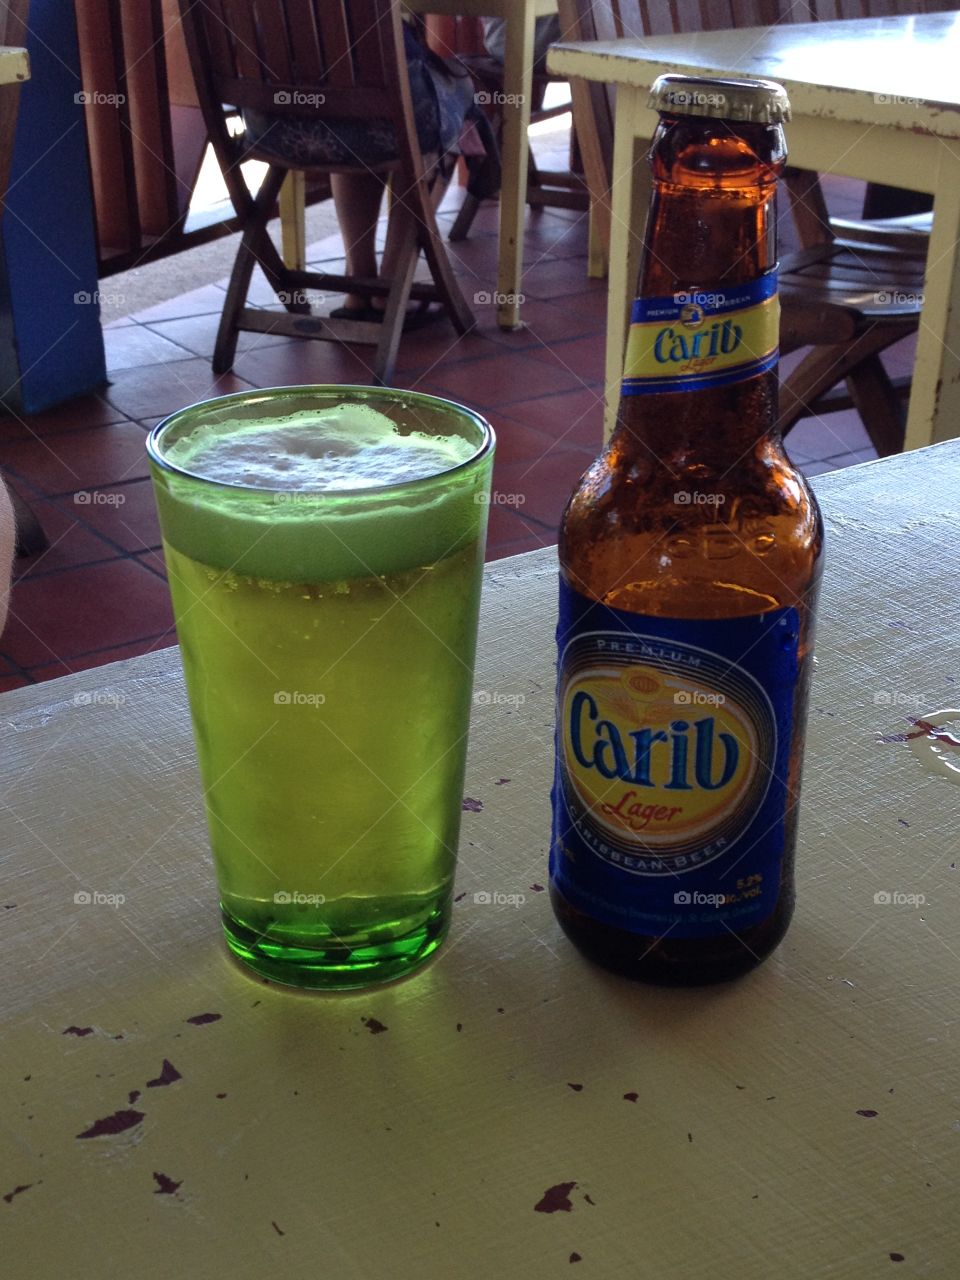 Caribbean beer